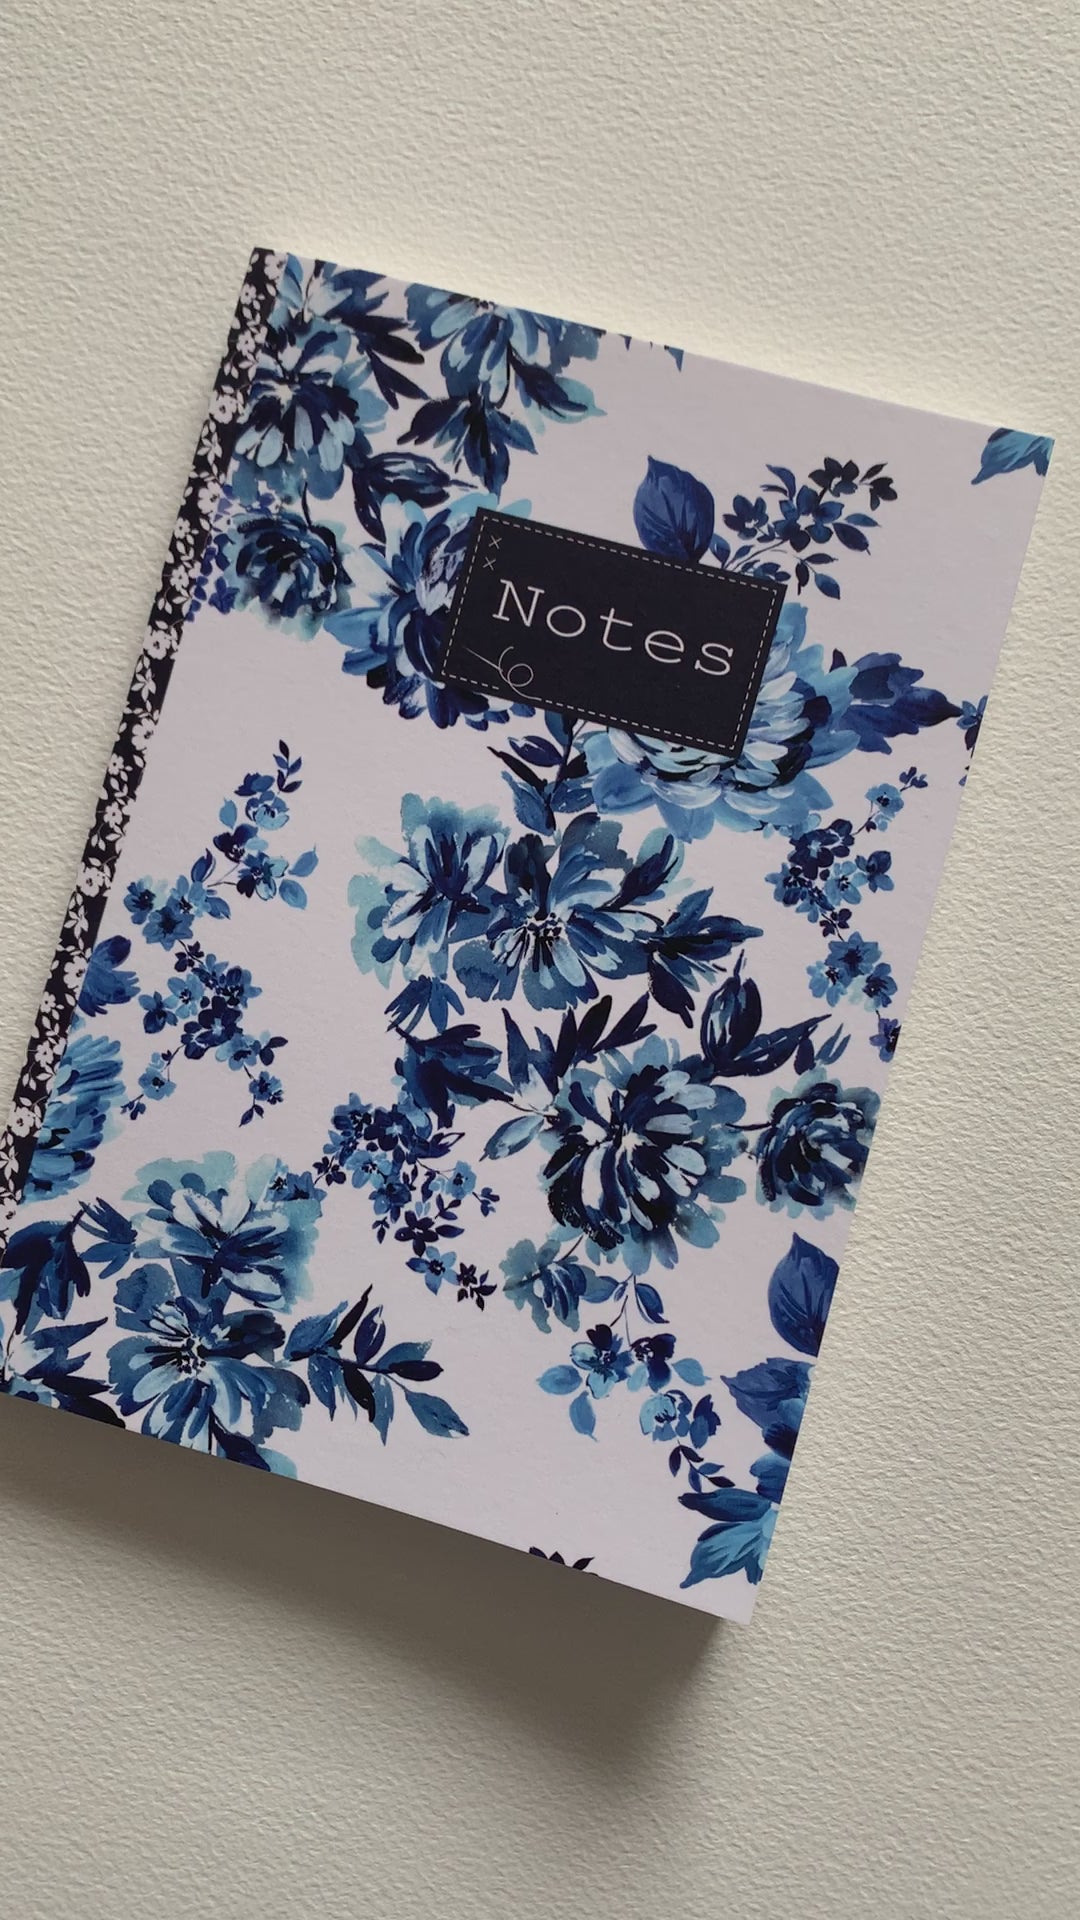 Indigo blue notebook